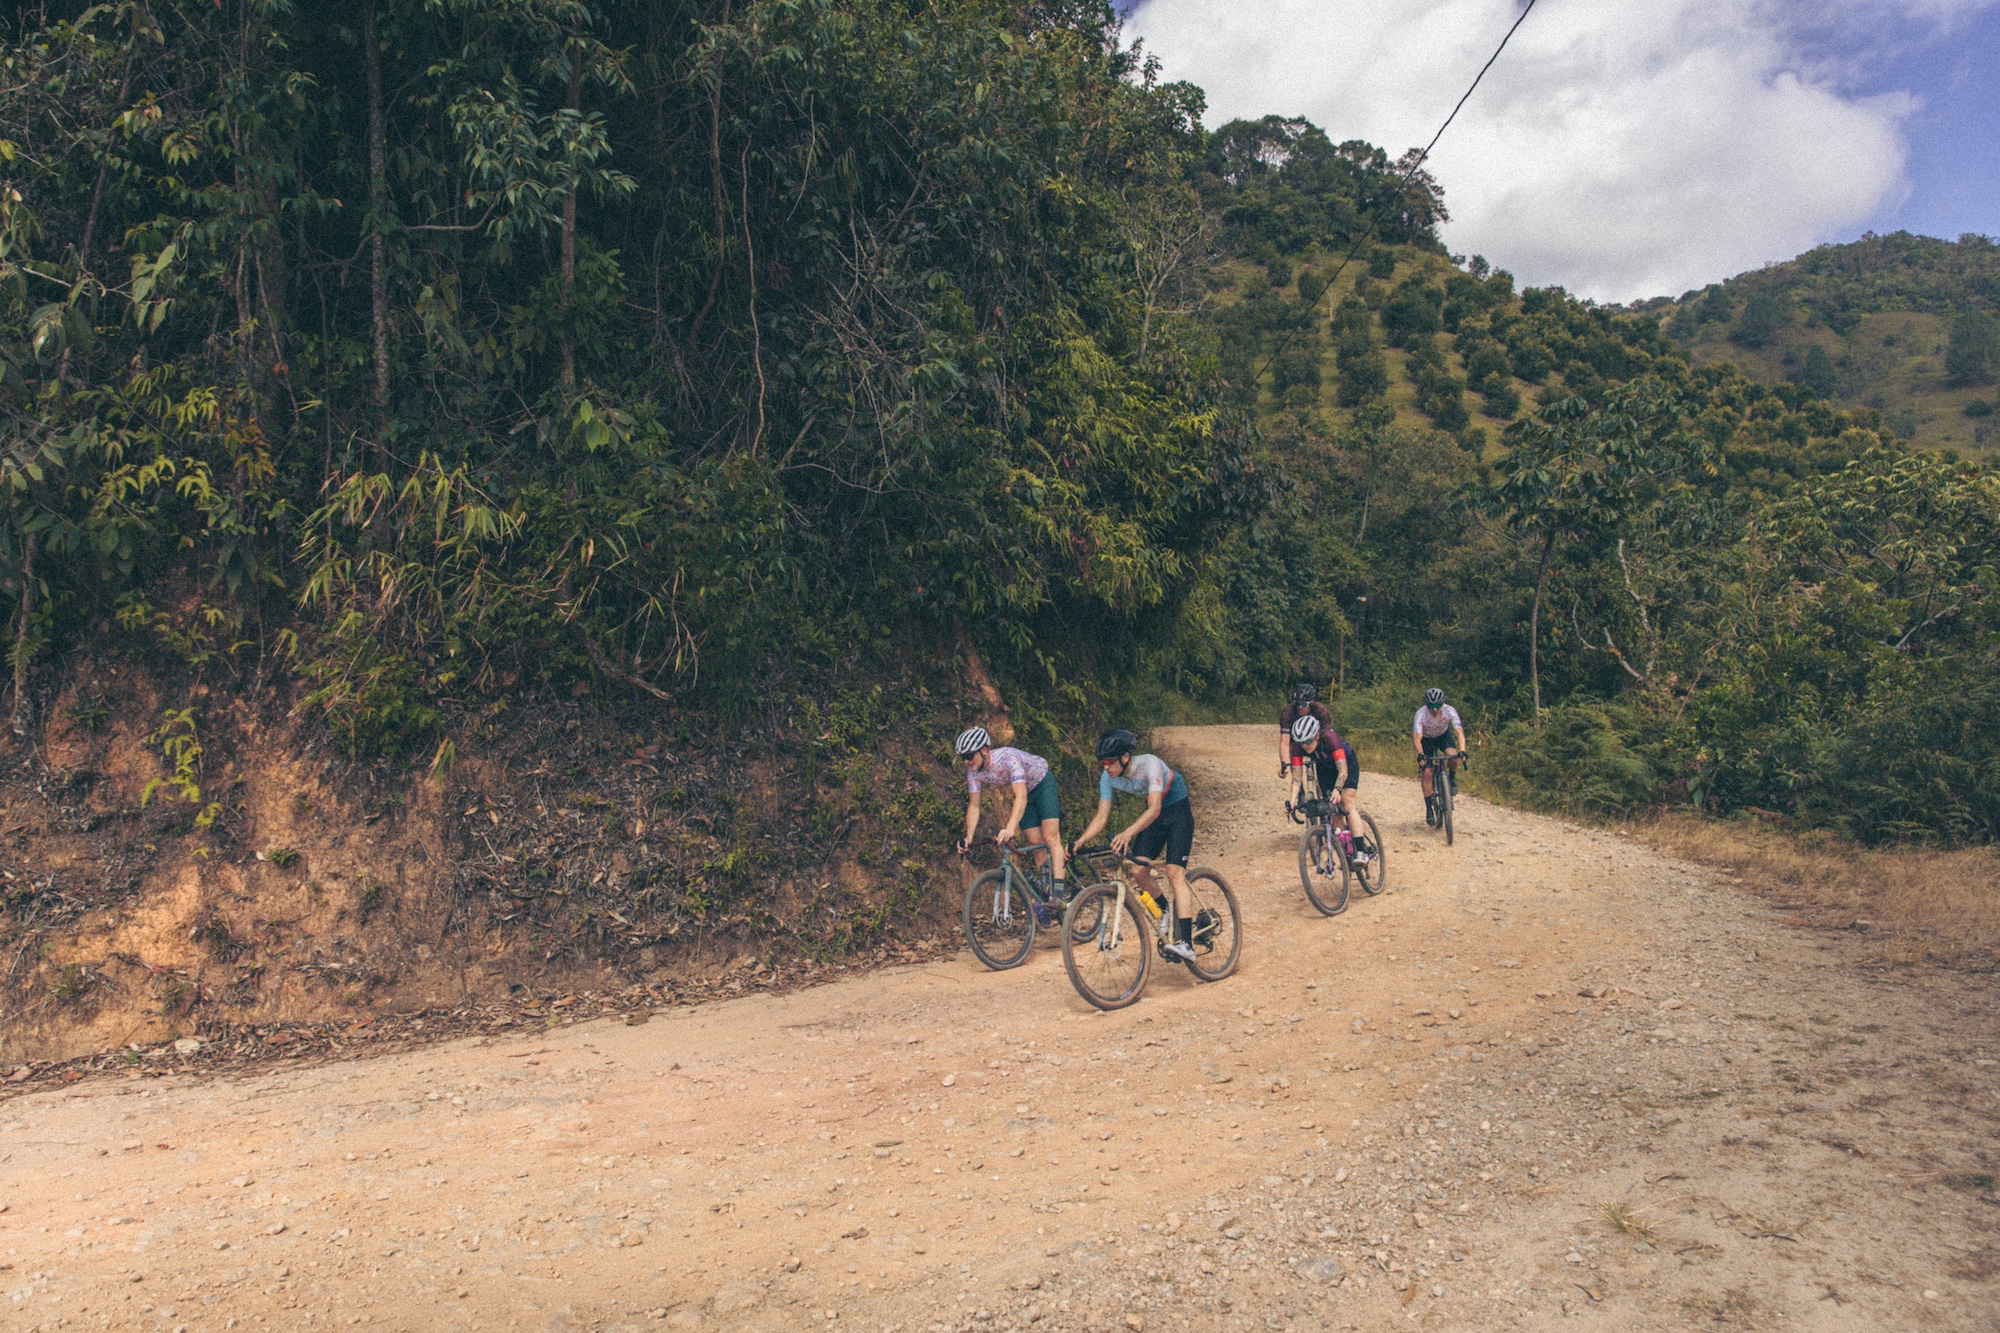 Scarab bikes in action on El Retiro gravel